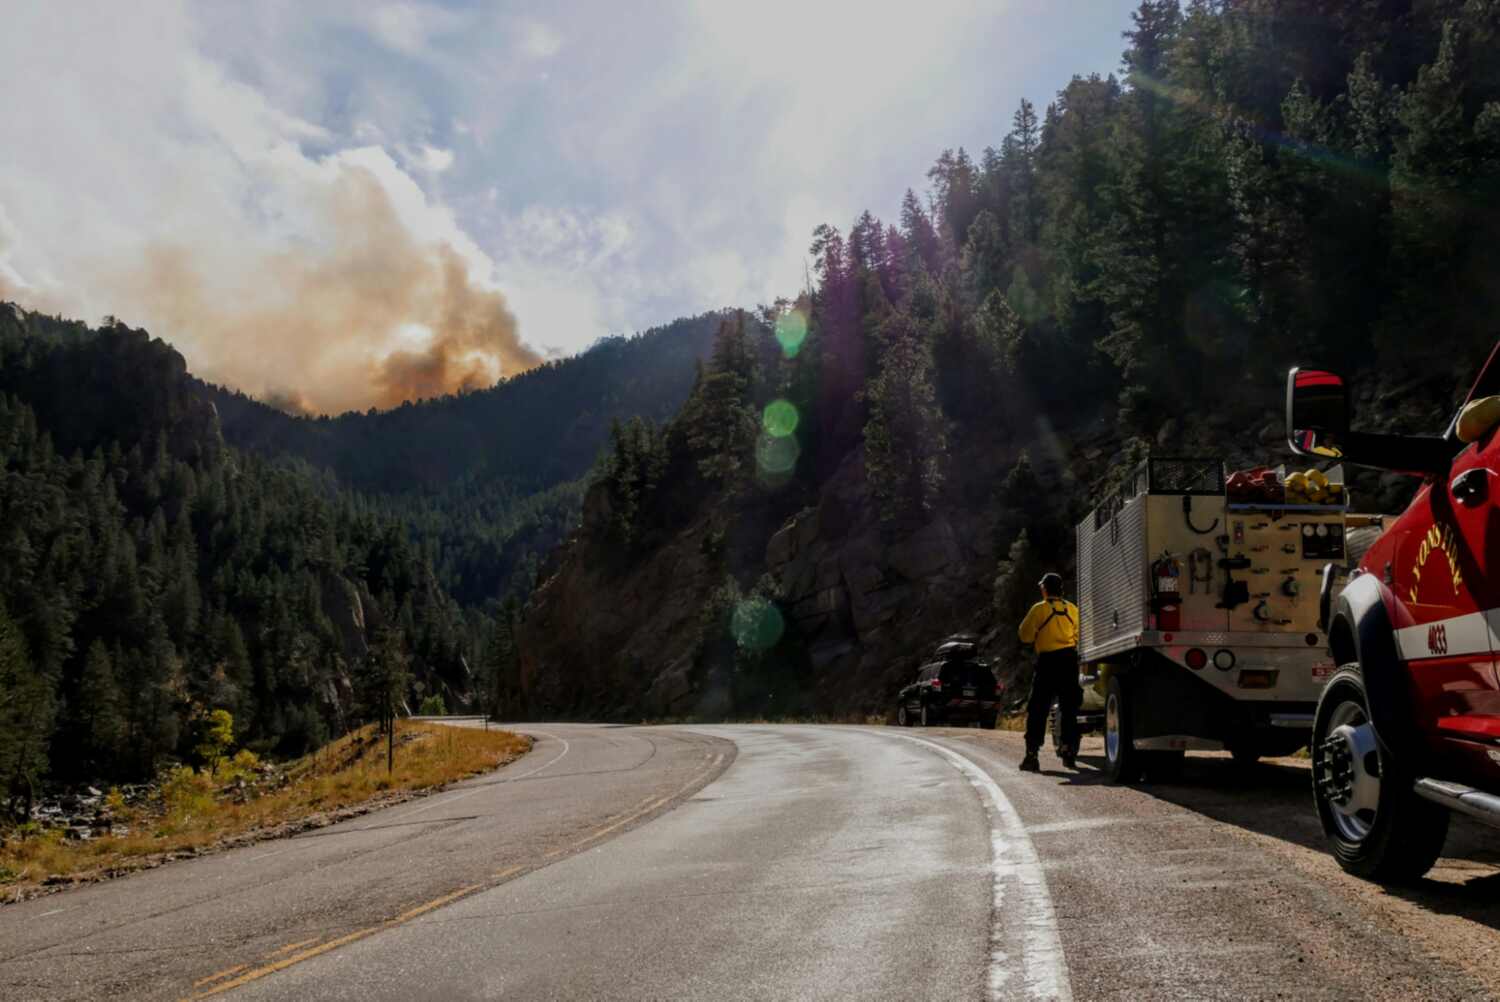 fire truck on roadside with wildfire smoke in distance